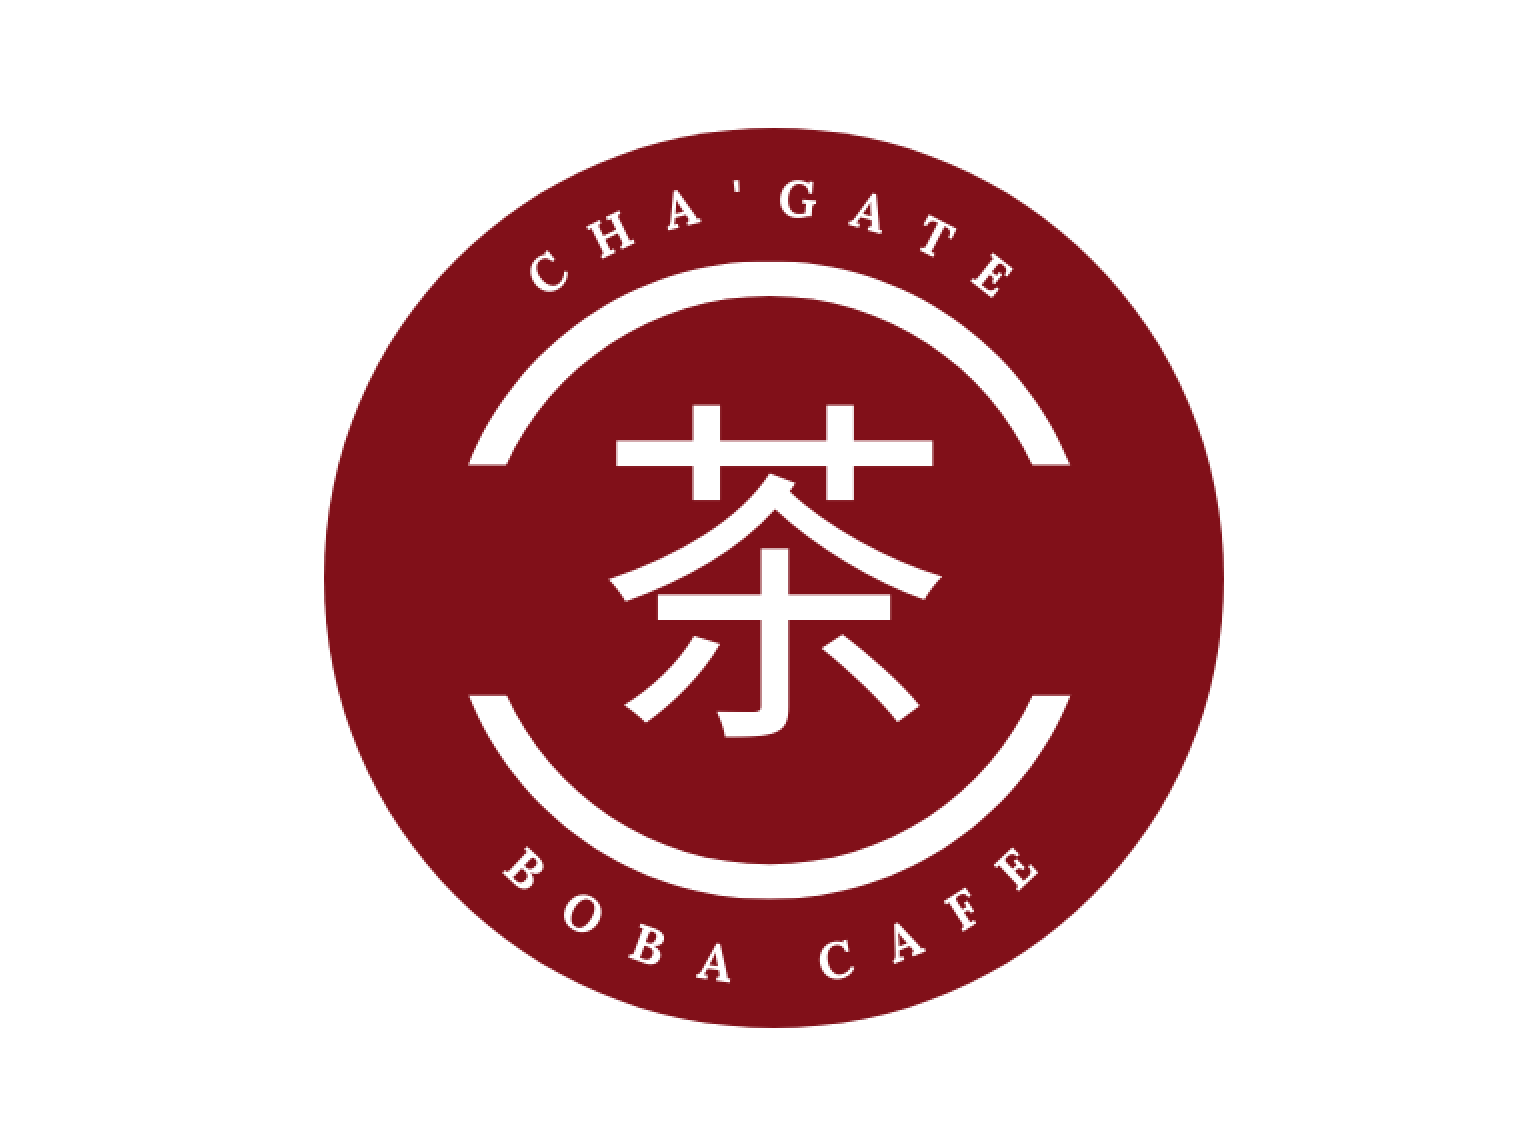 Cha ’Gate red and white circular logo